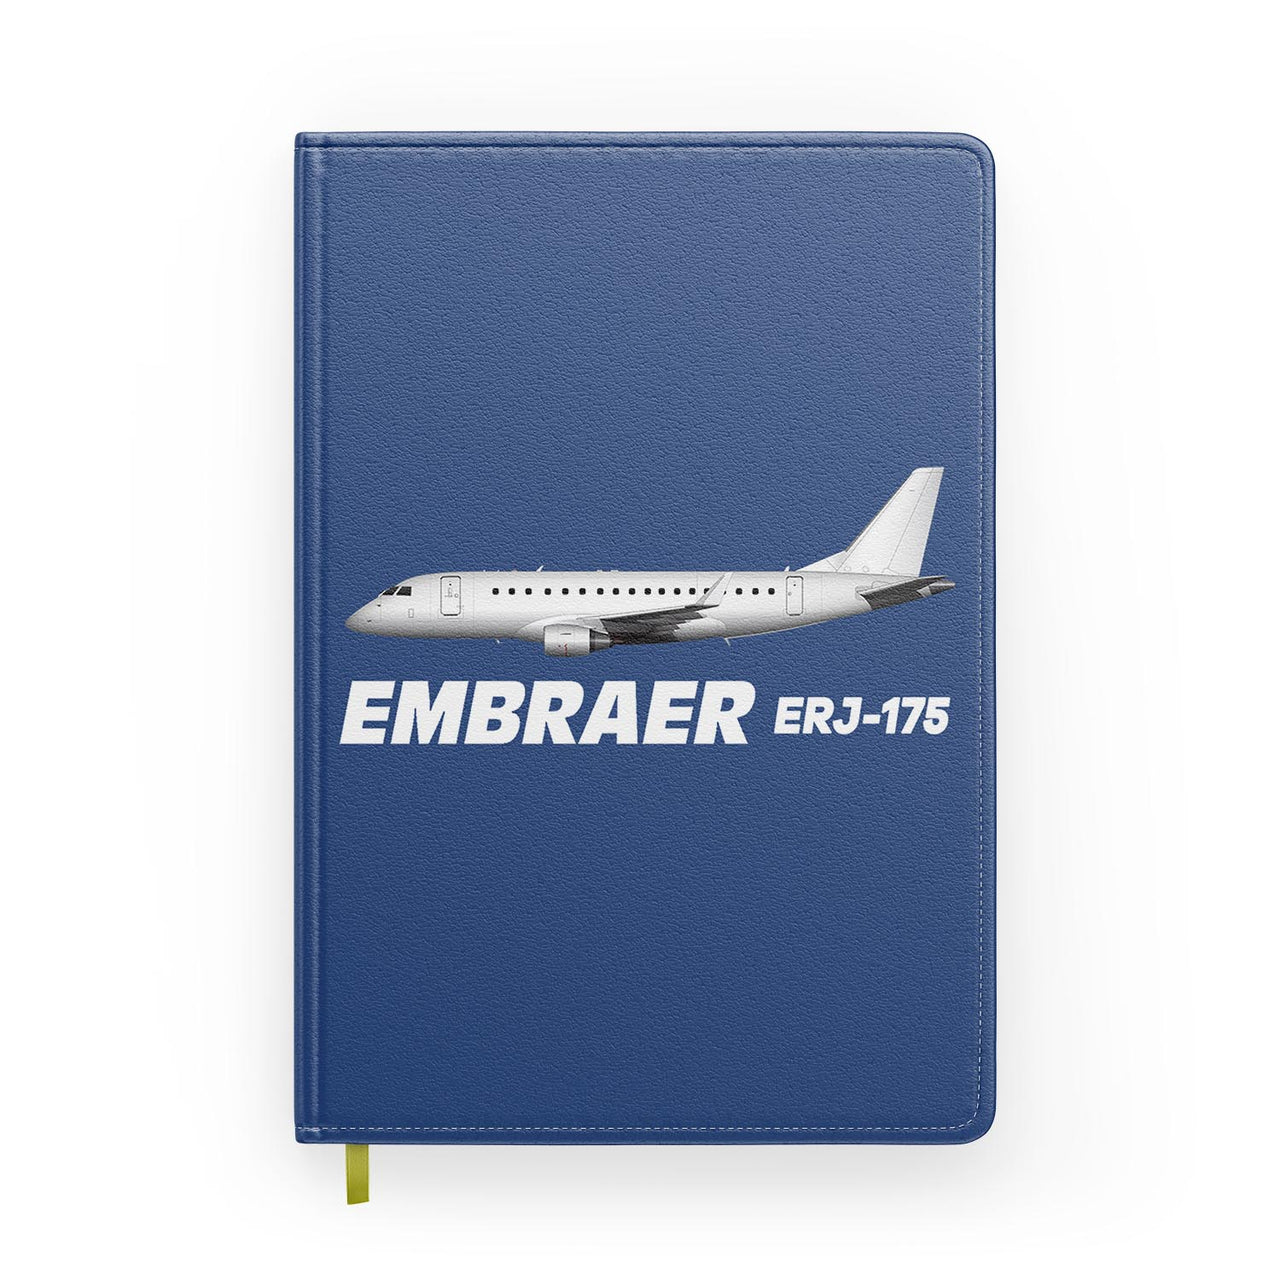 The Embraer ERJ-175 Designed Notebooks